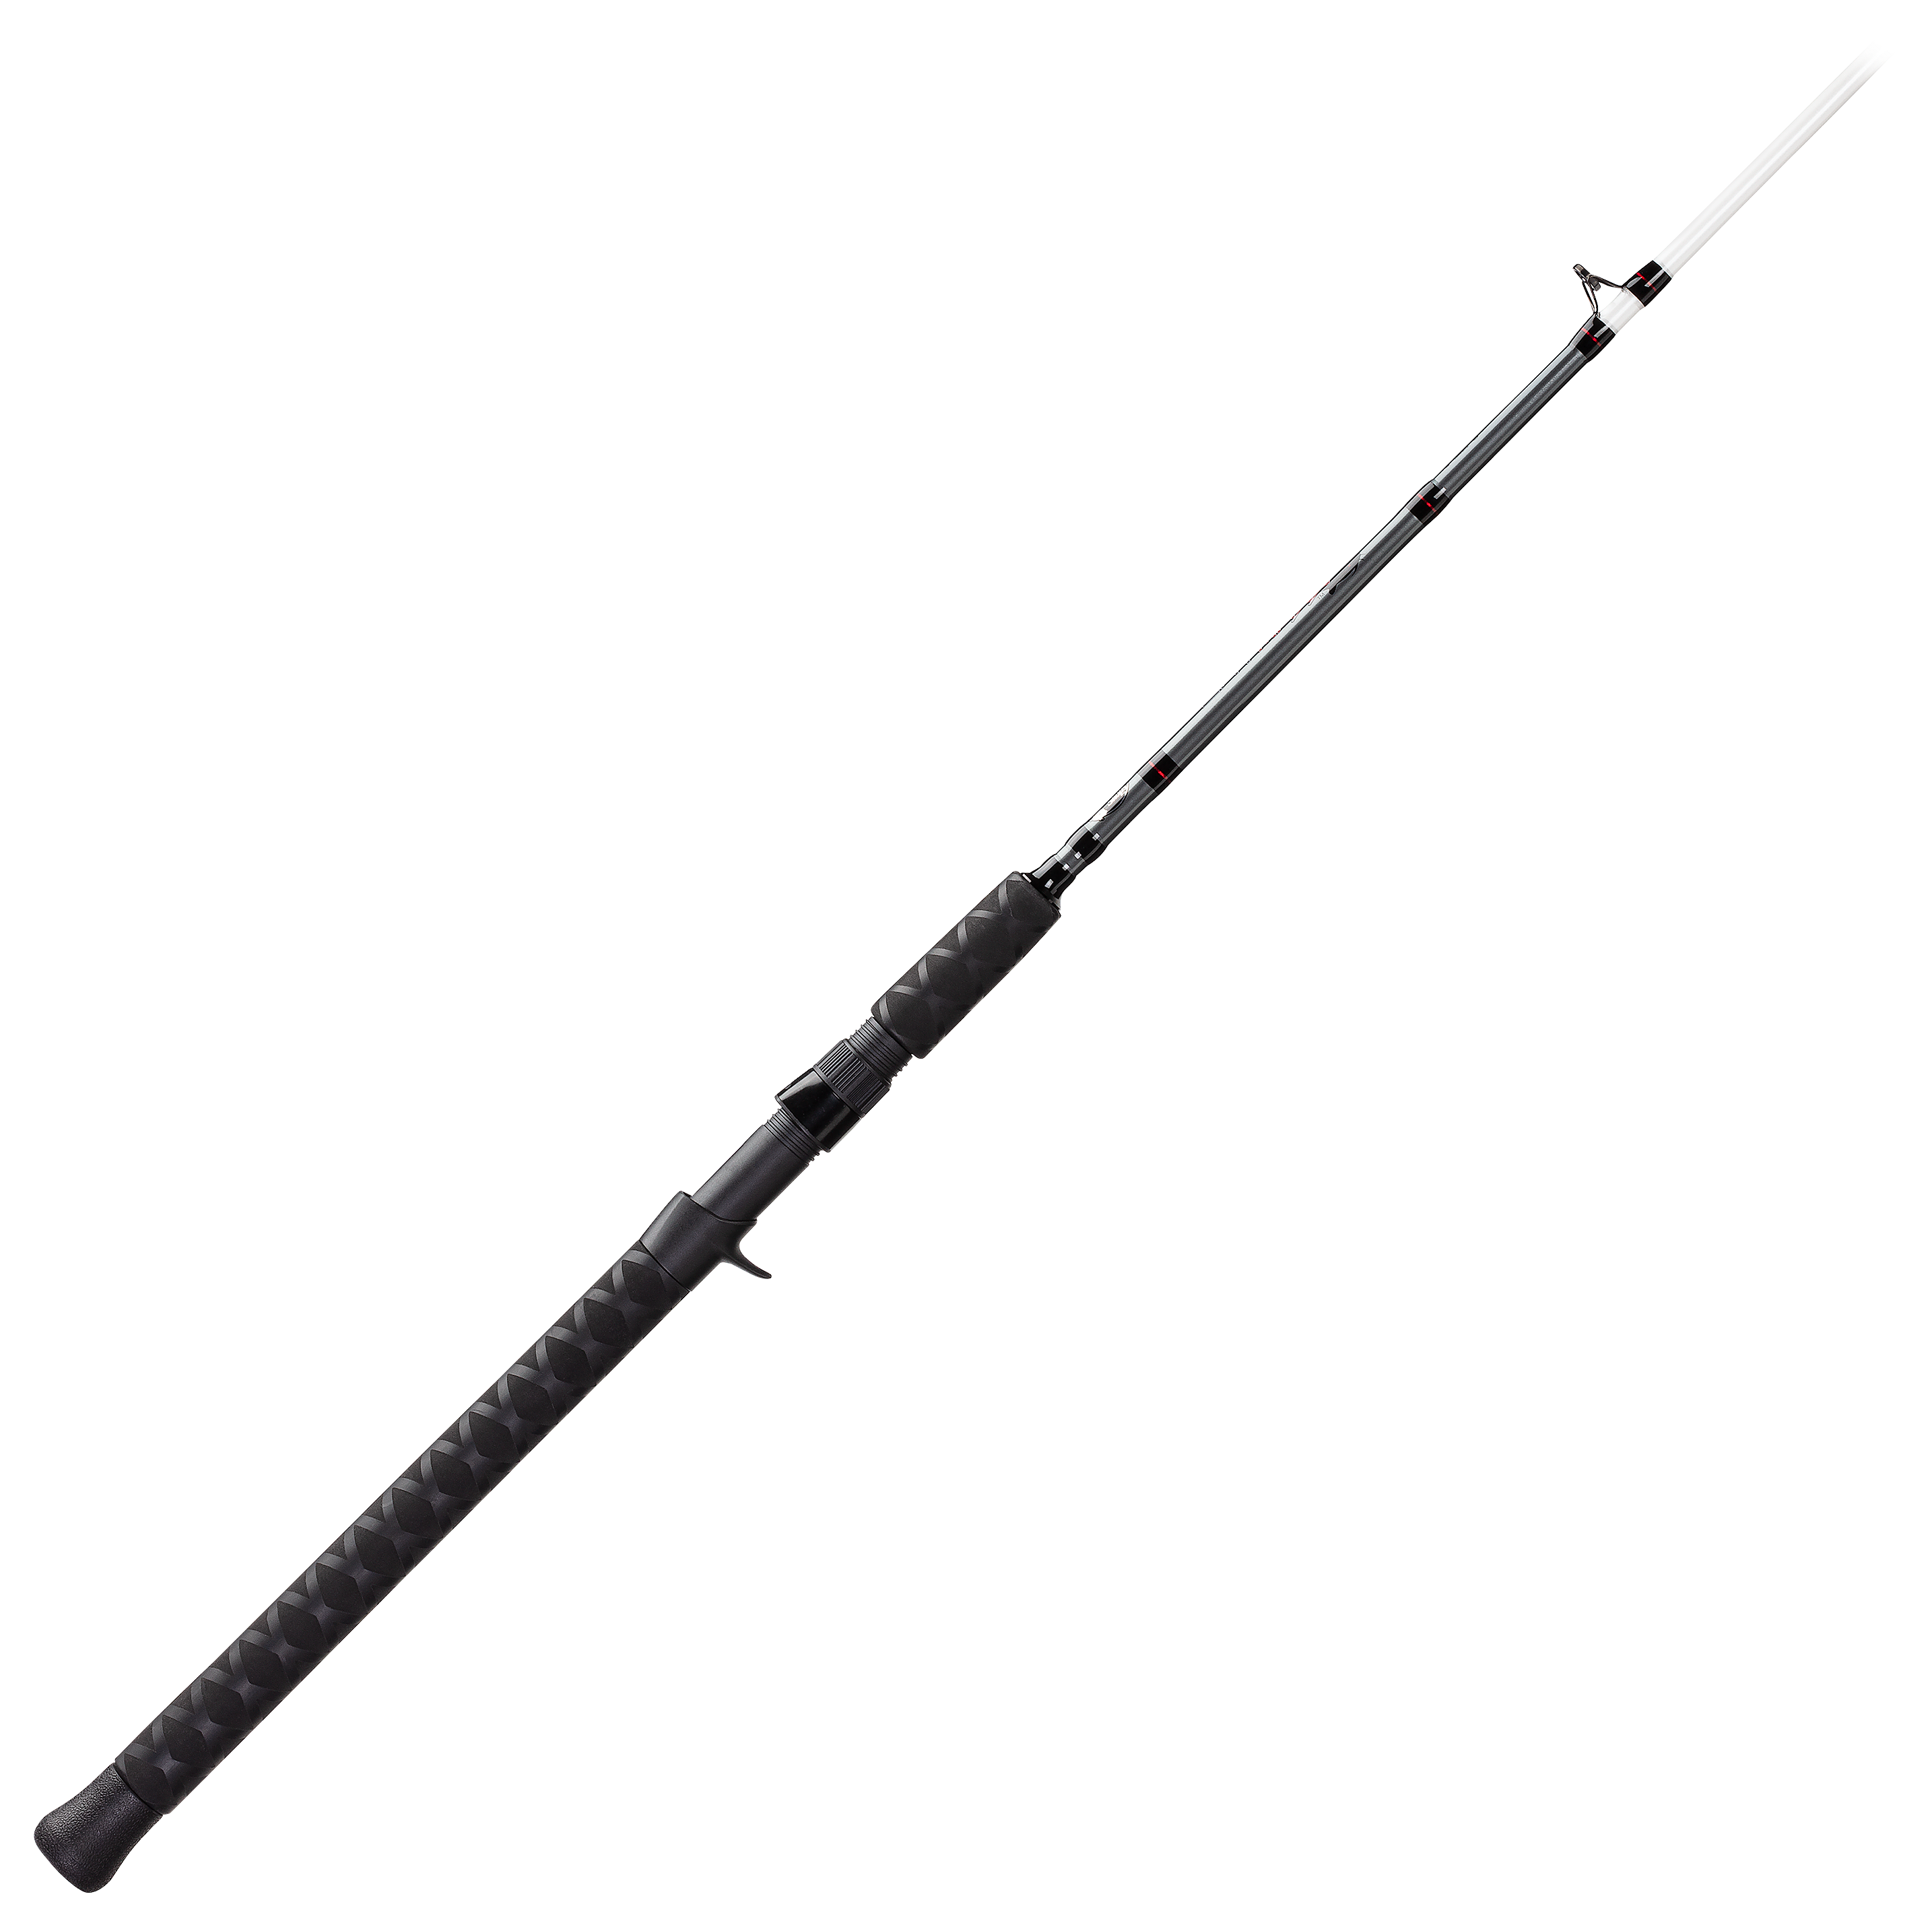 Bass Pro Shops CatMaxx Casting Rod - 8' - Medium Heavy - Moderate Fast - 1 Piece - C